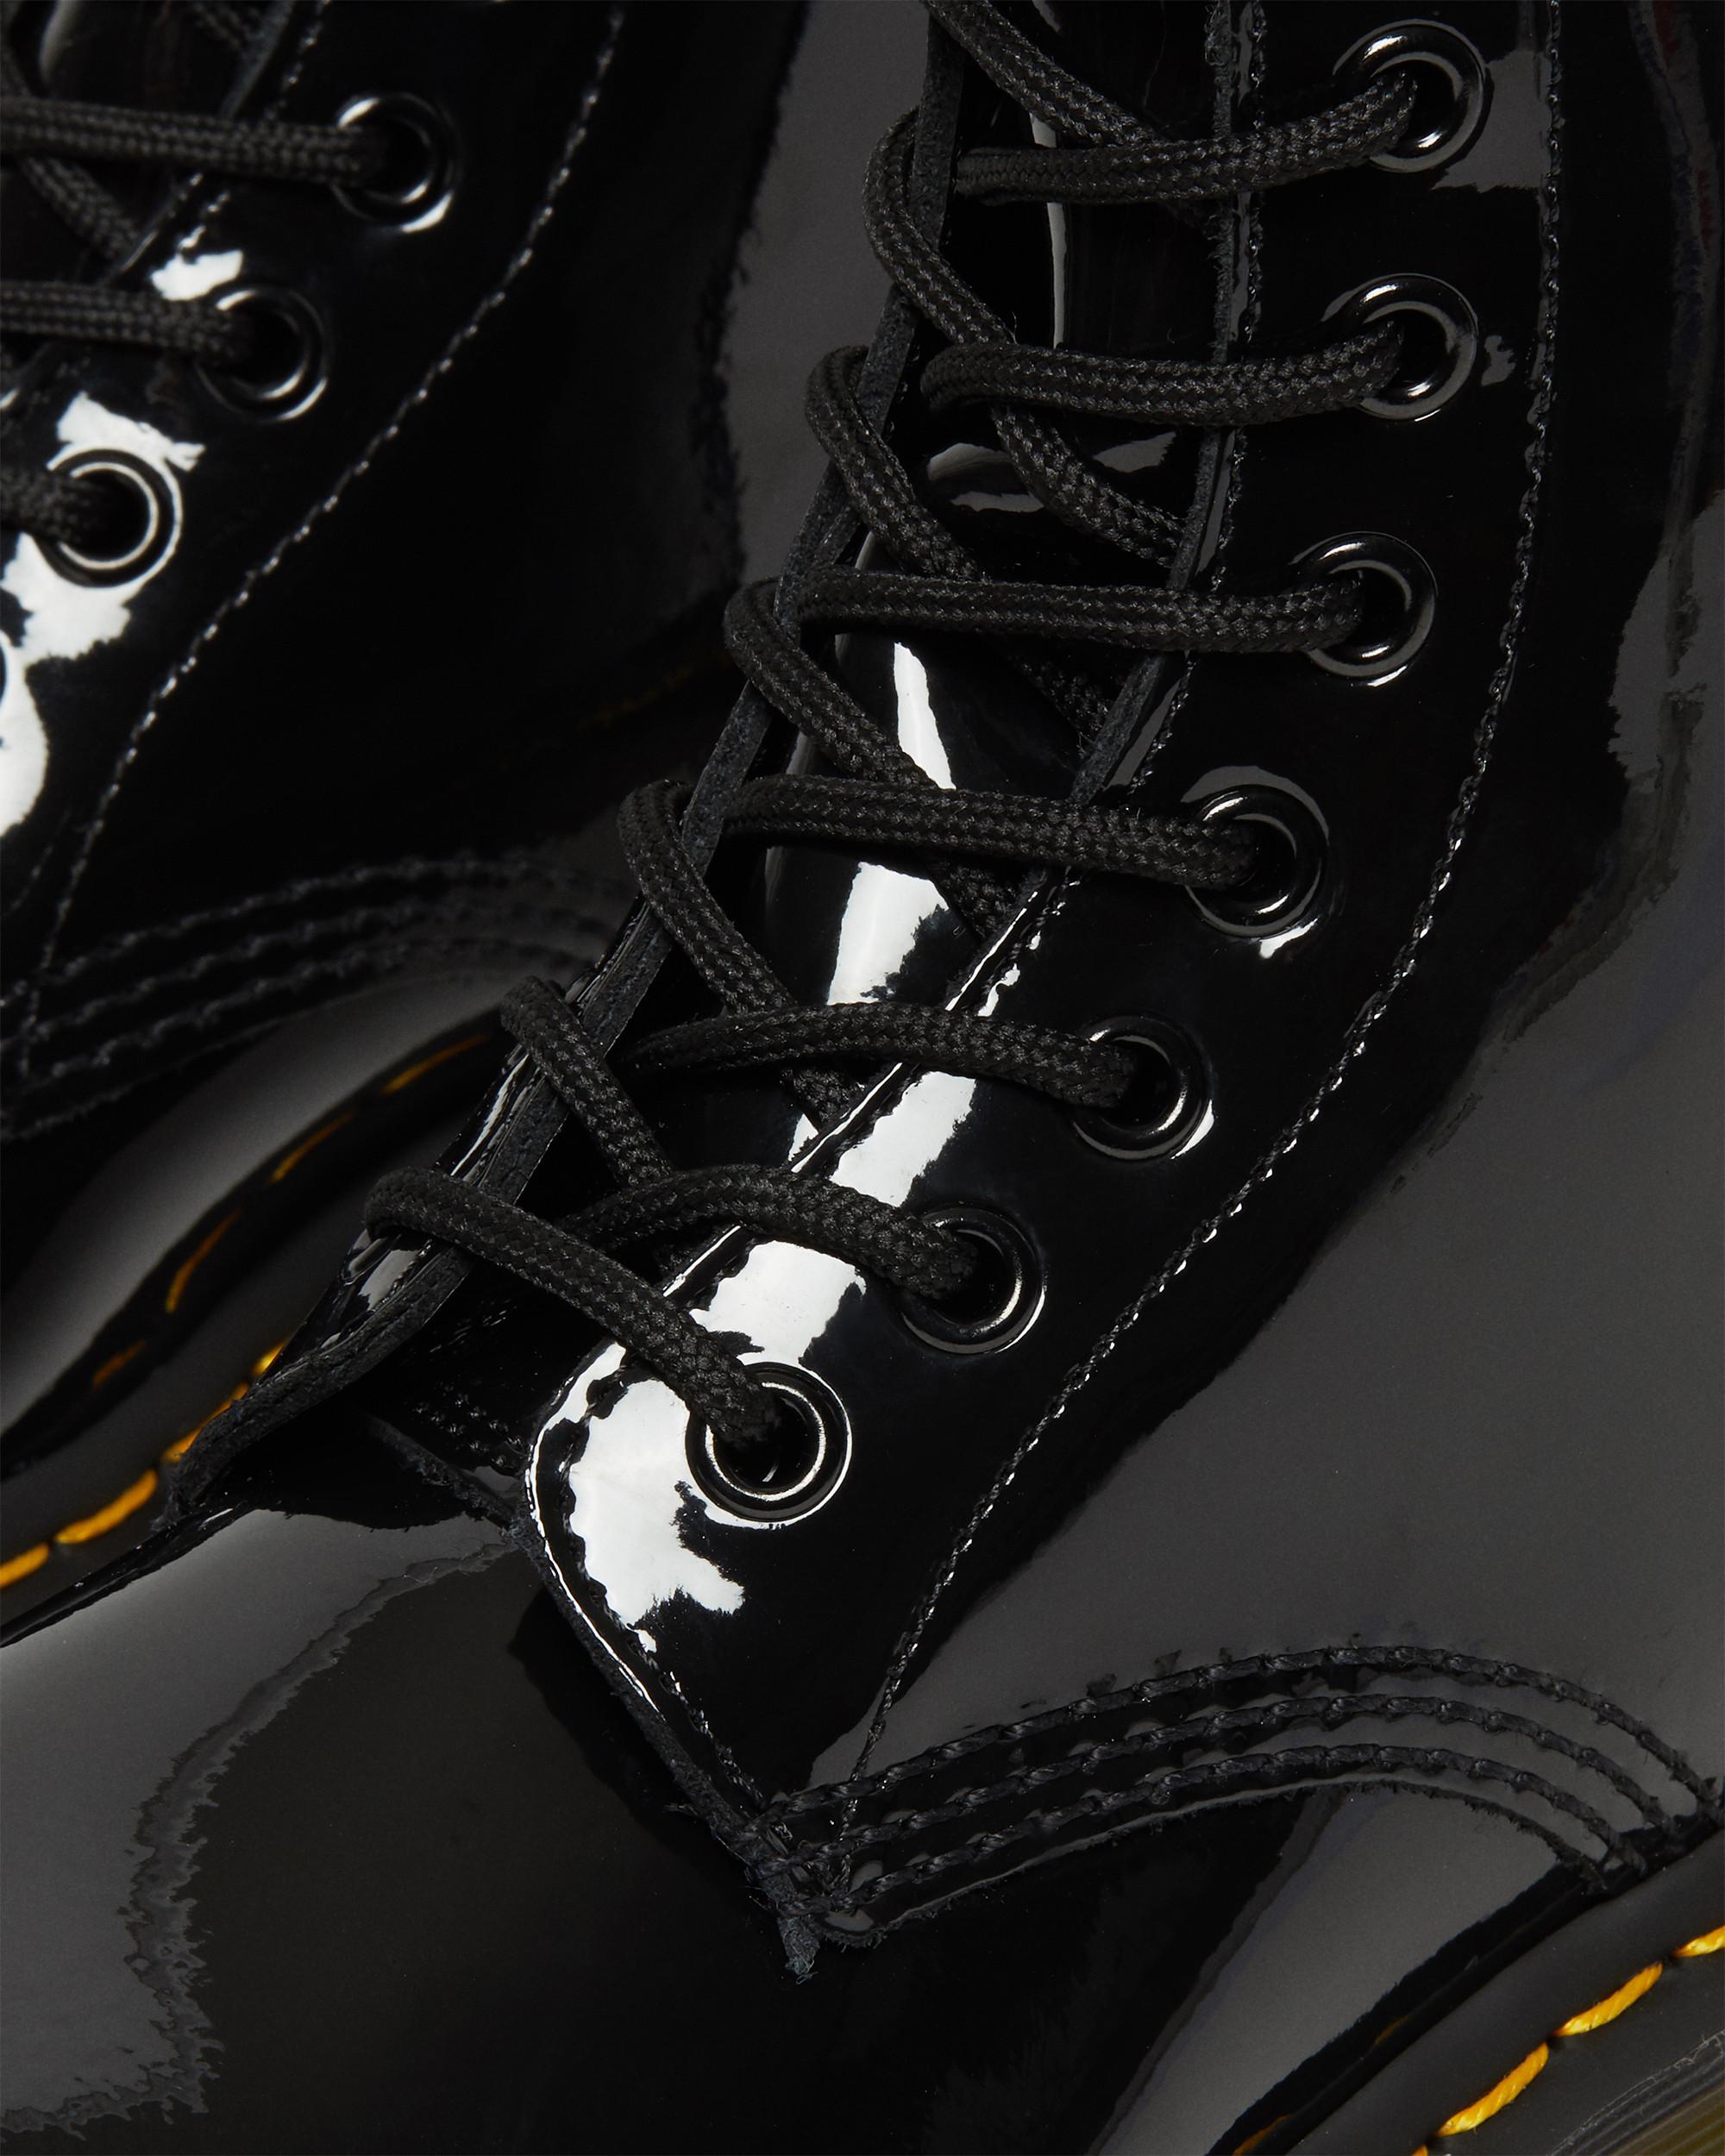 Avl Fonetik Gods 1460 Patent Leather Lace Up Boots | Dr. Martens